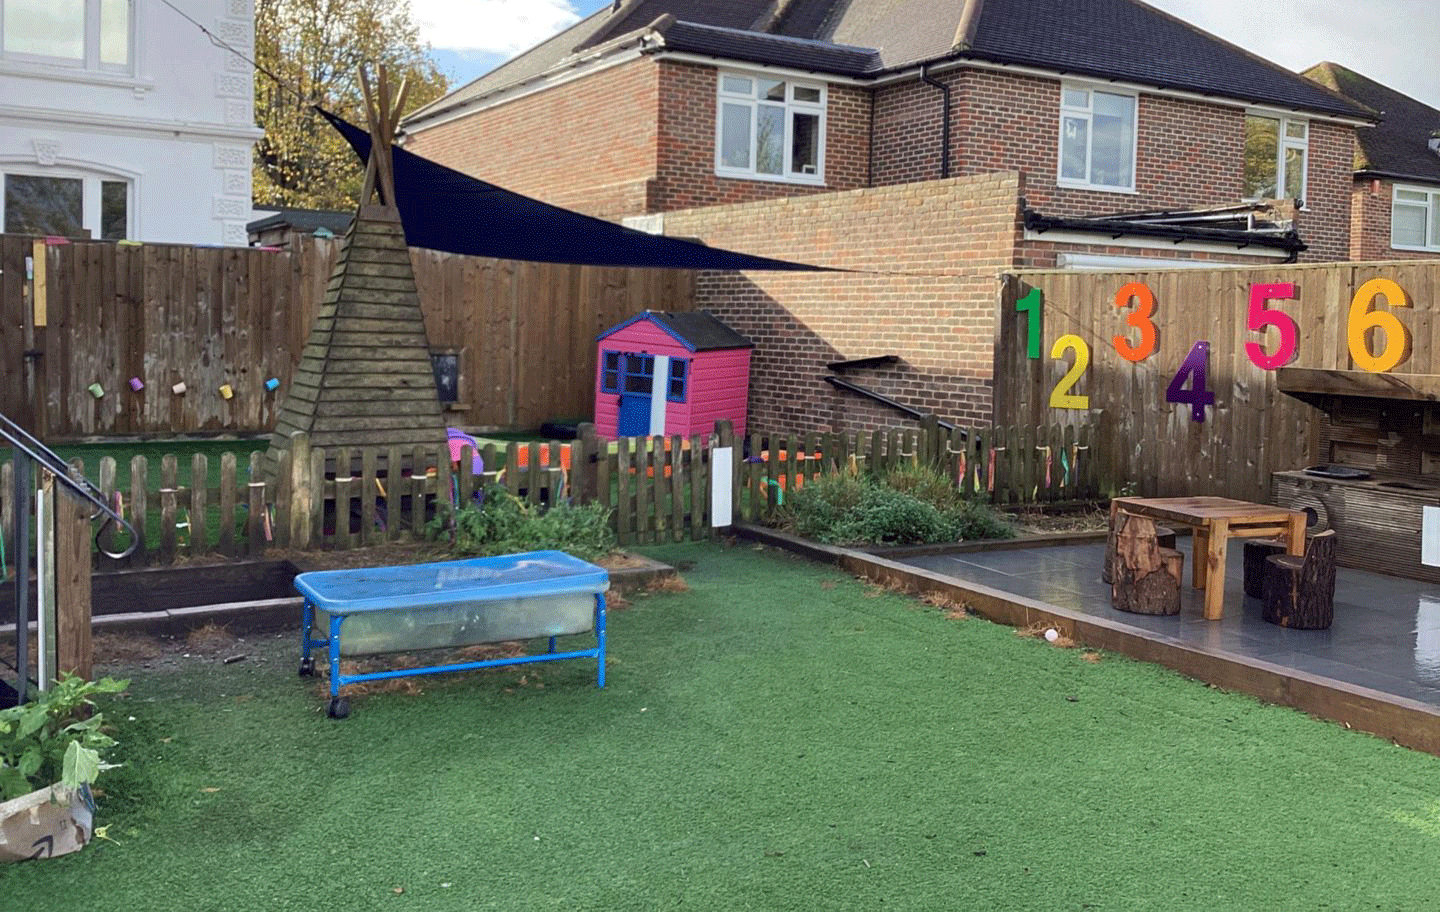 Bright Horizons Worthing Day Nursery and Preschool - Garden